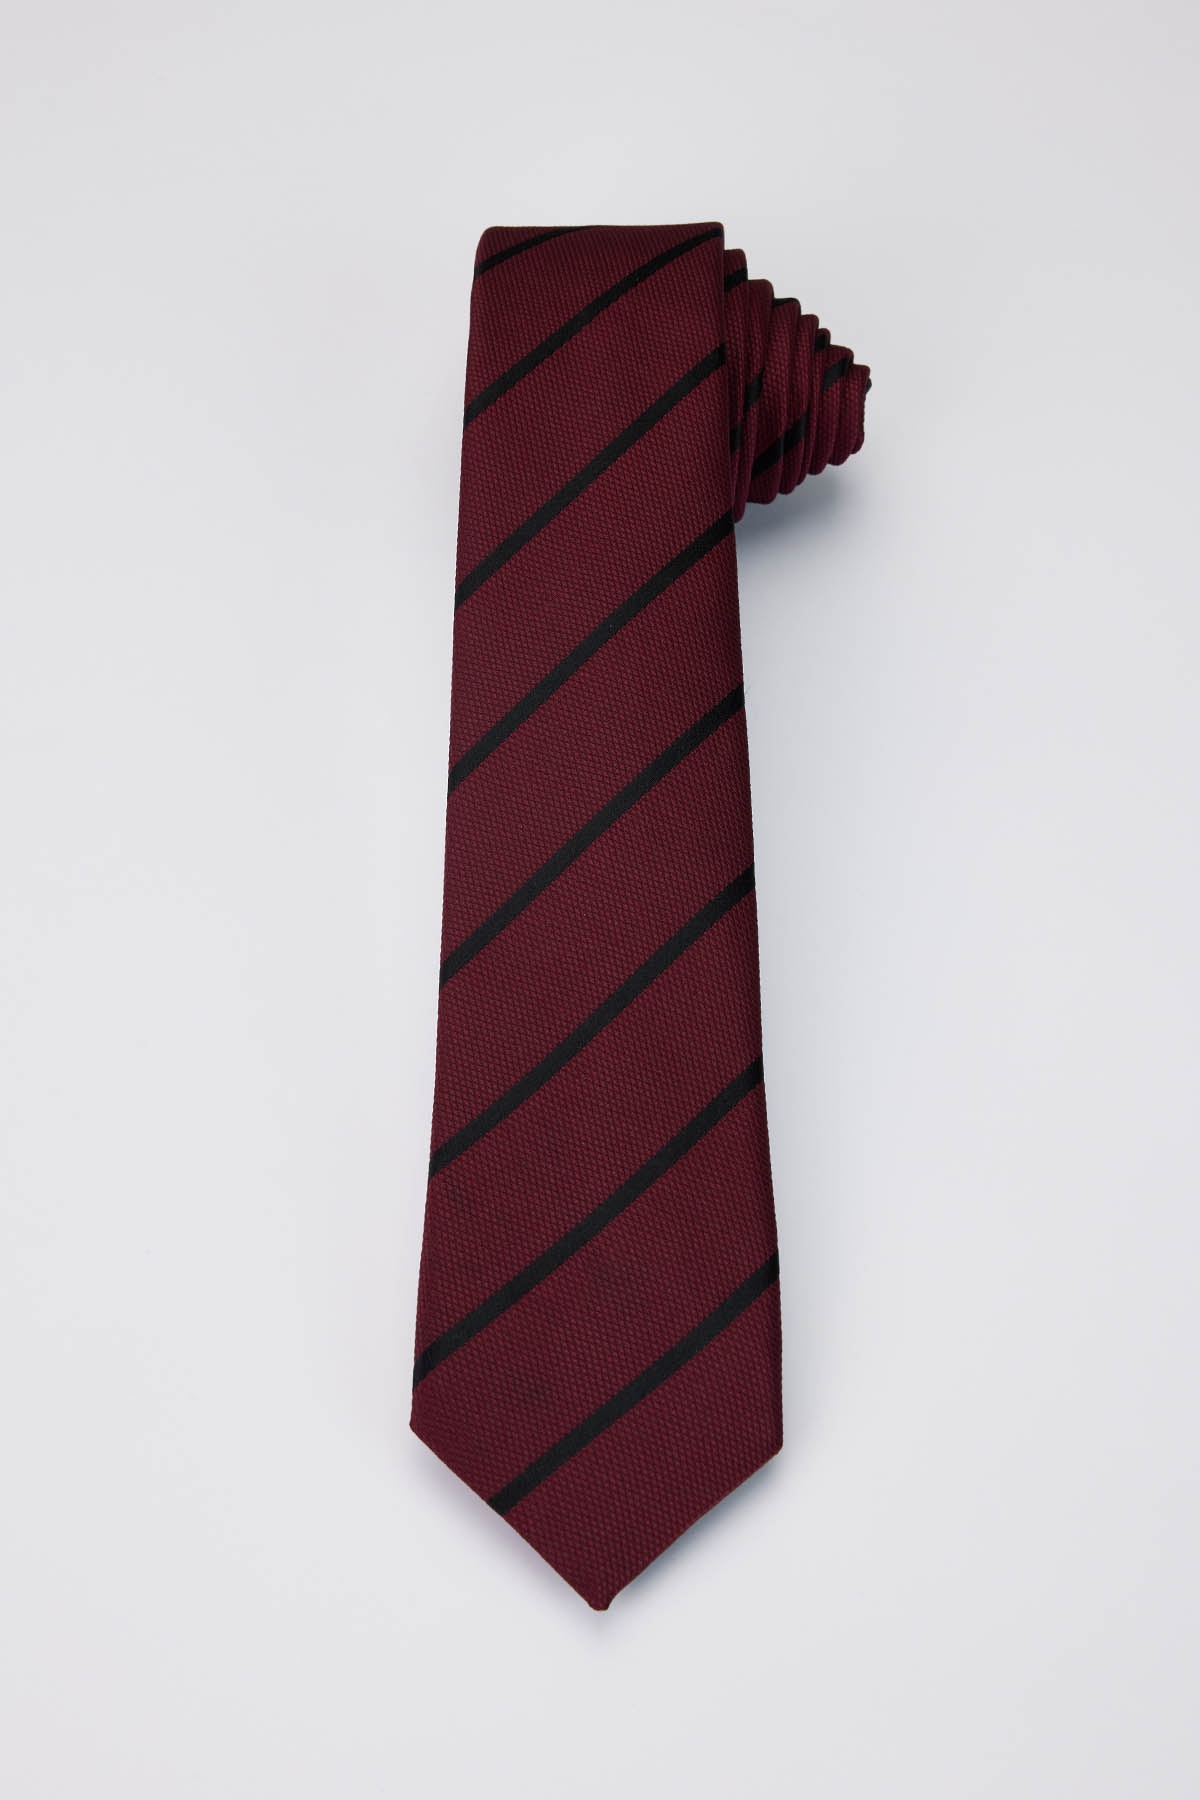  bordo Krawat